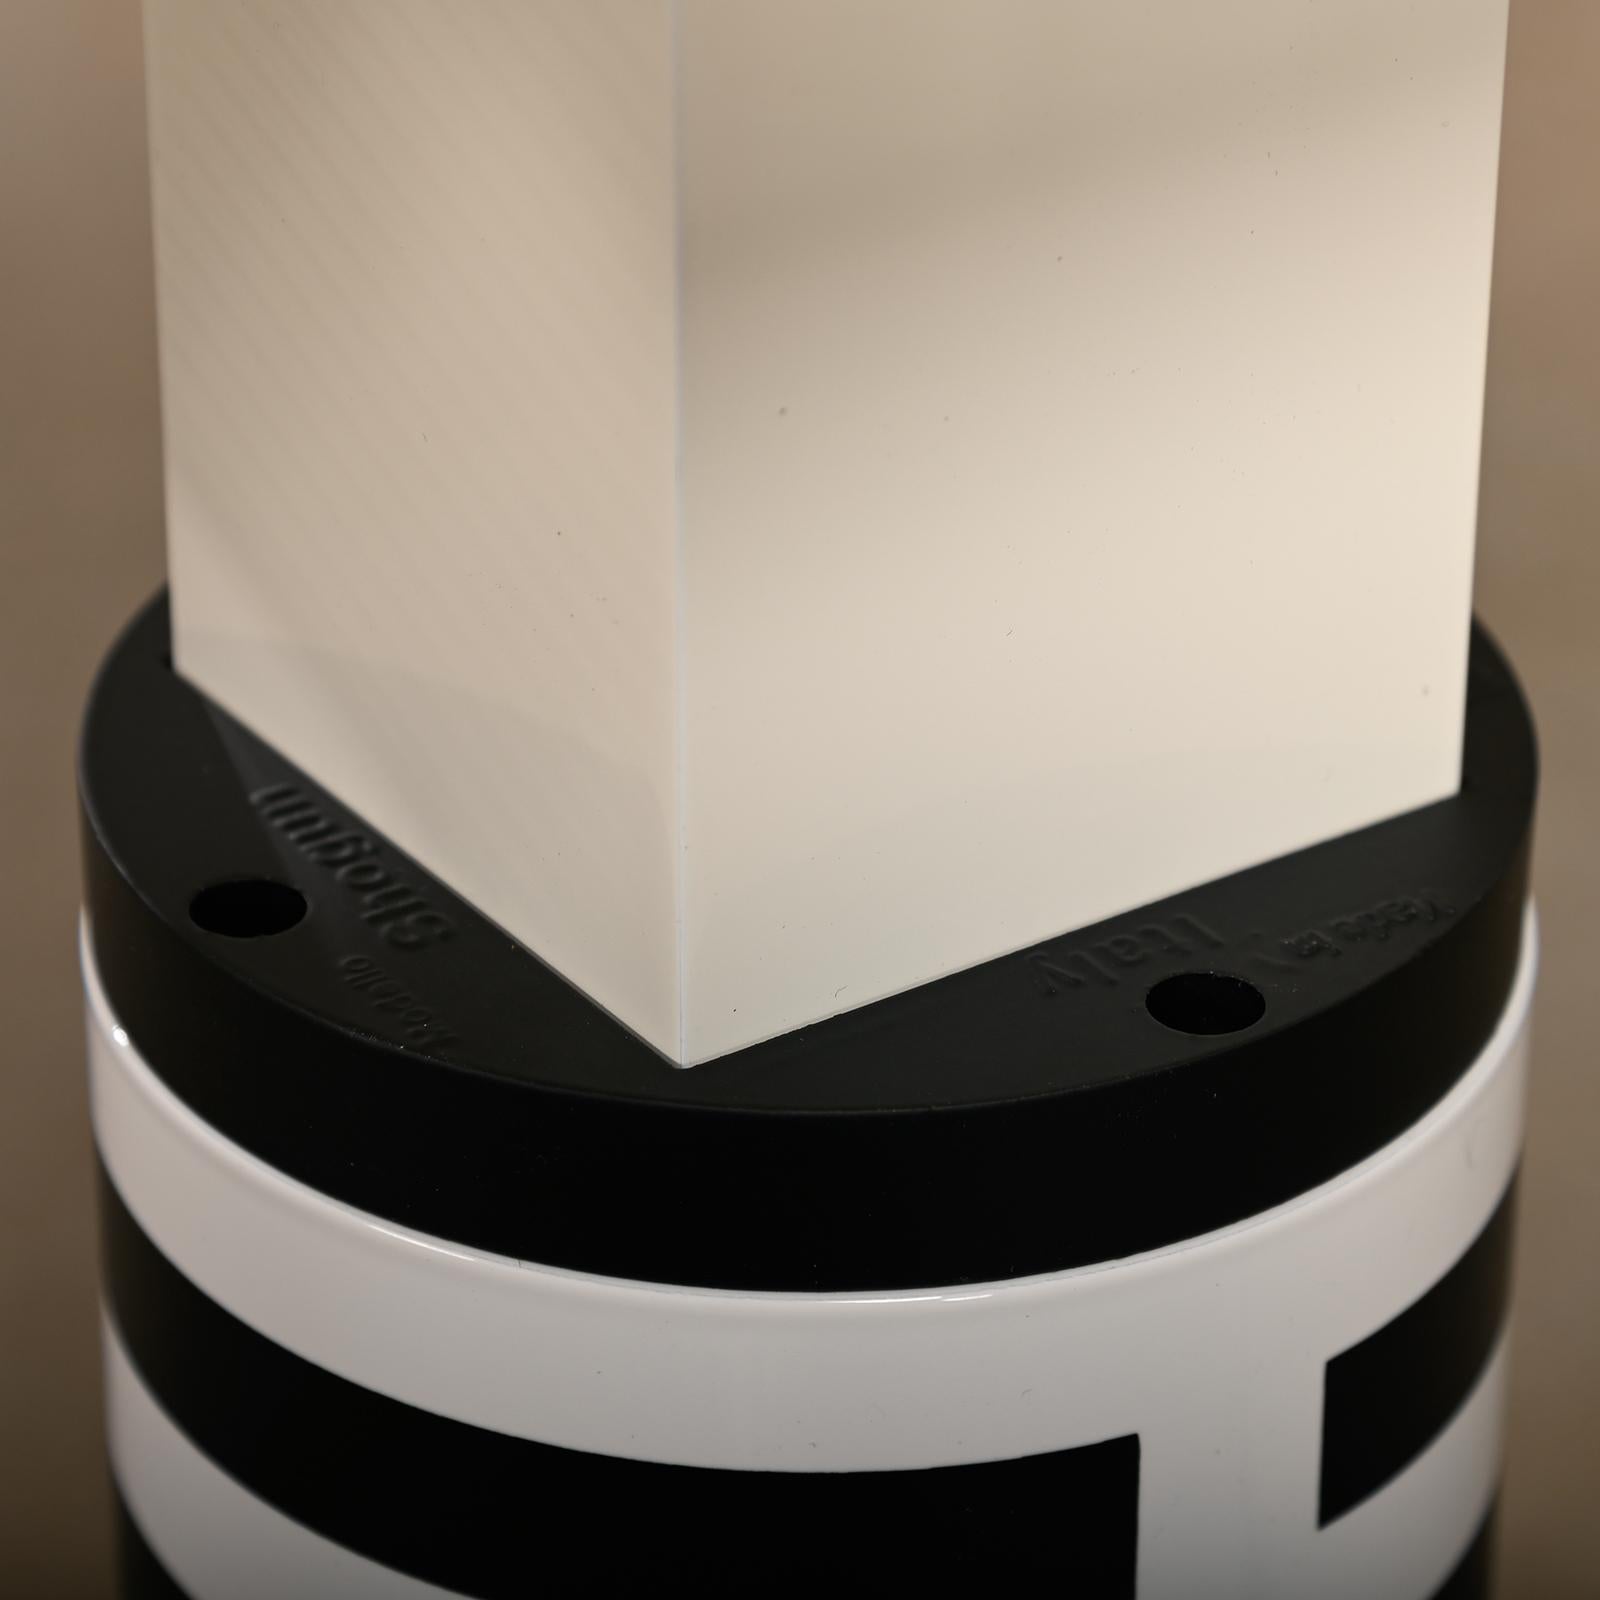 Mario Botta Shogun Table Lamp in black and white for Artemide, Italy For Sale 3